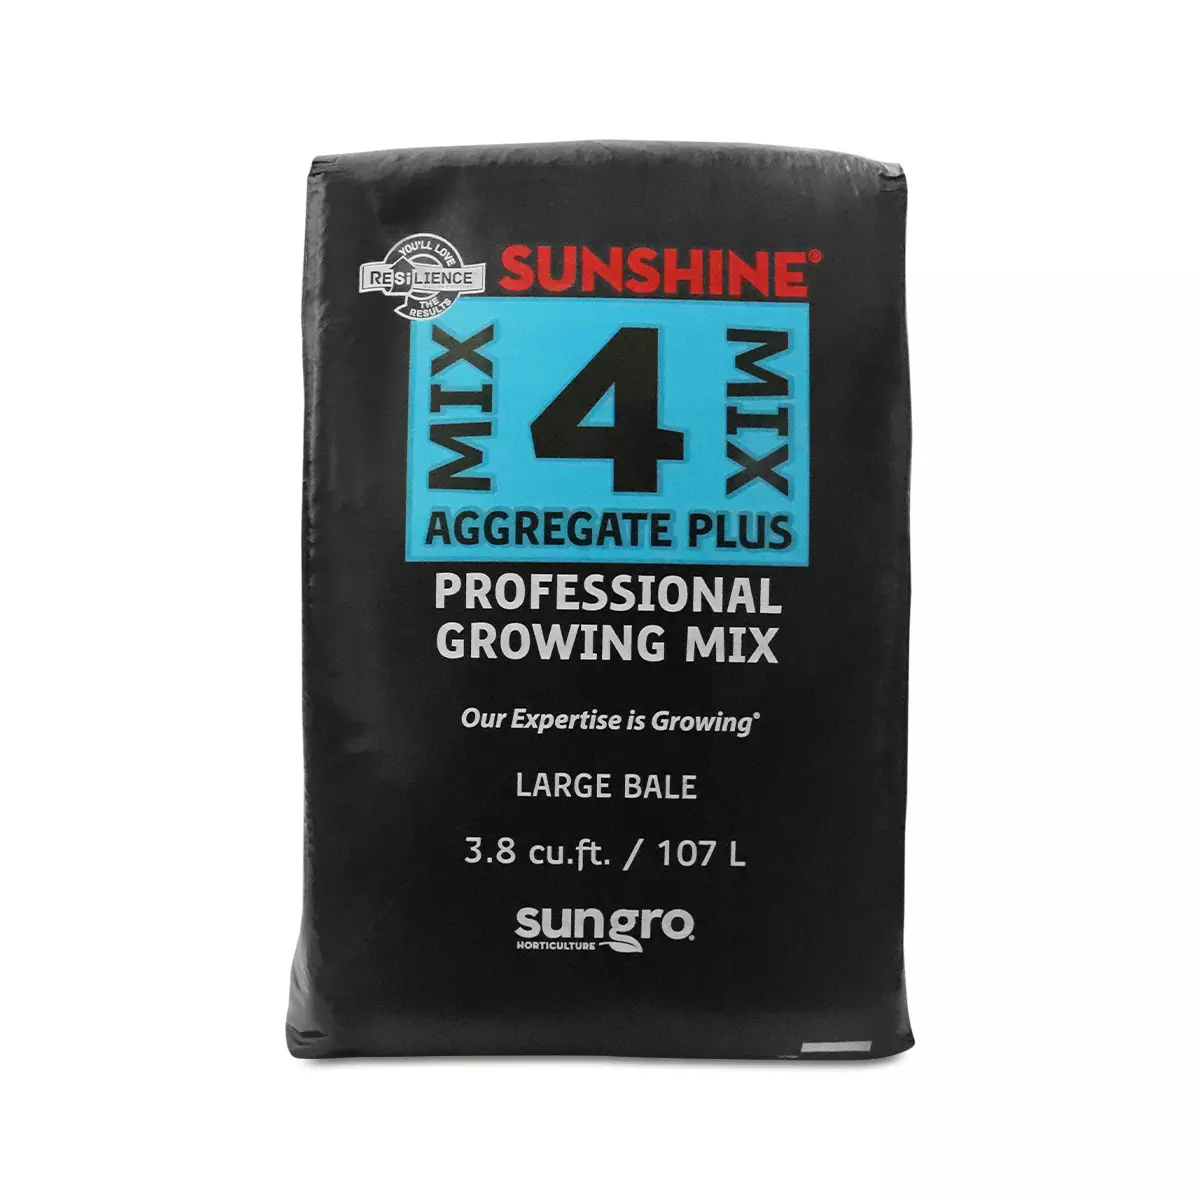 Sungro Sunshine 4 Aggregate Plus